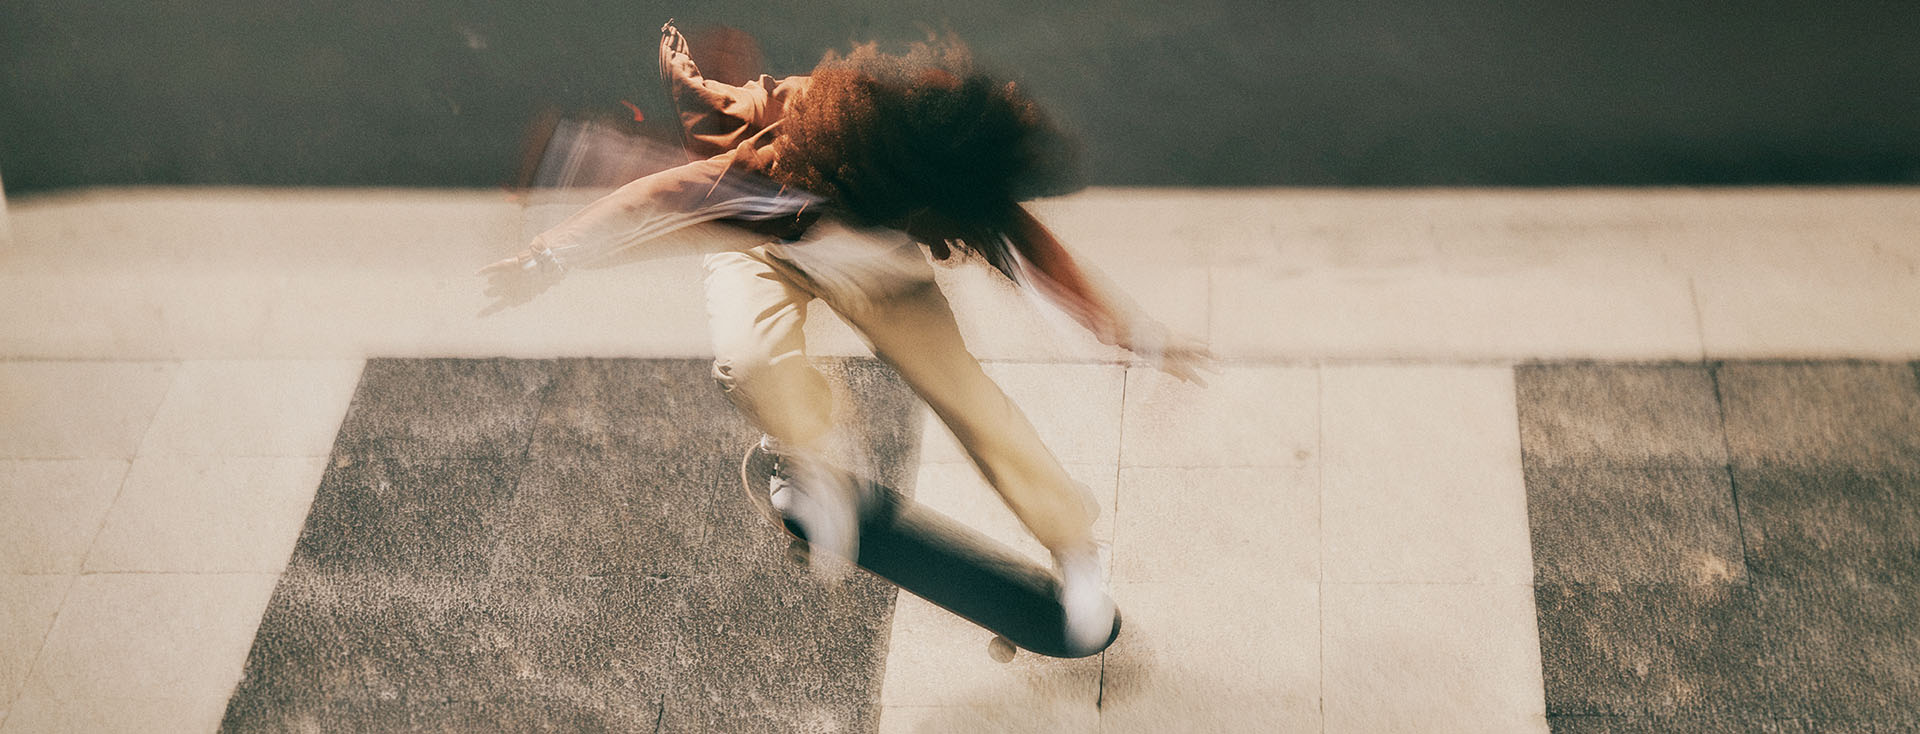 A female skateboarder in a motion blur (Photo)